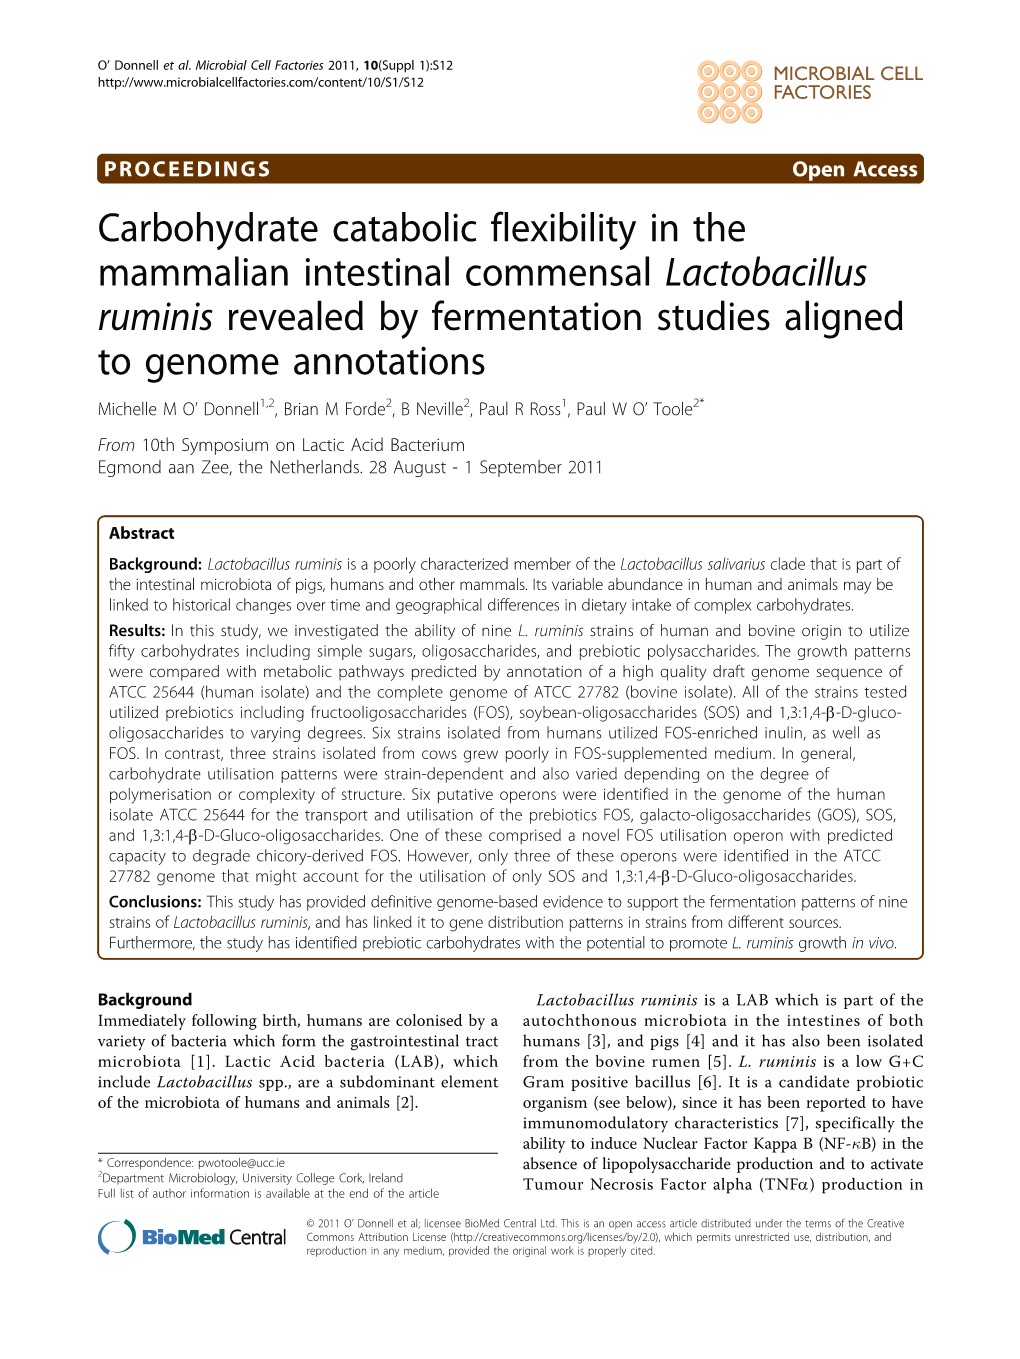 Carbohydrate Catabolic Flexibility in the Mammalian Intestinal